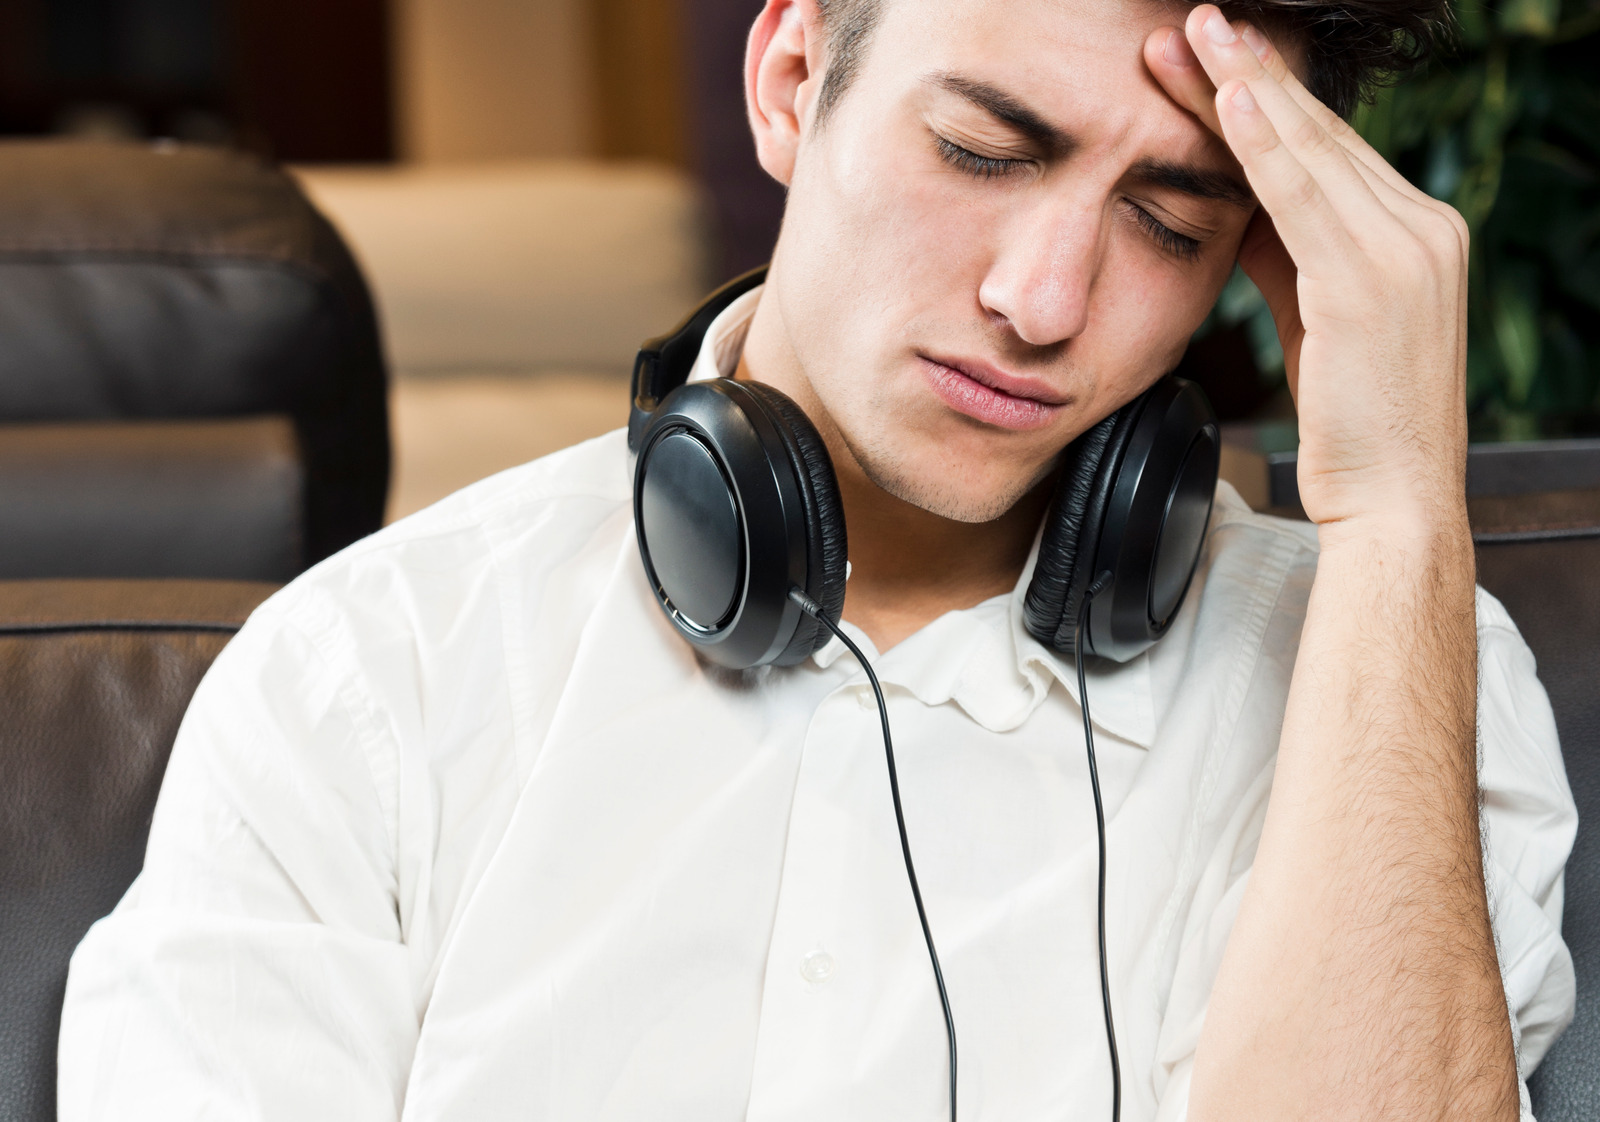 Upset man with headache and headphones